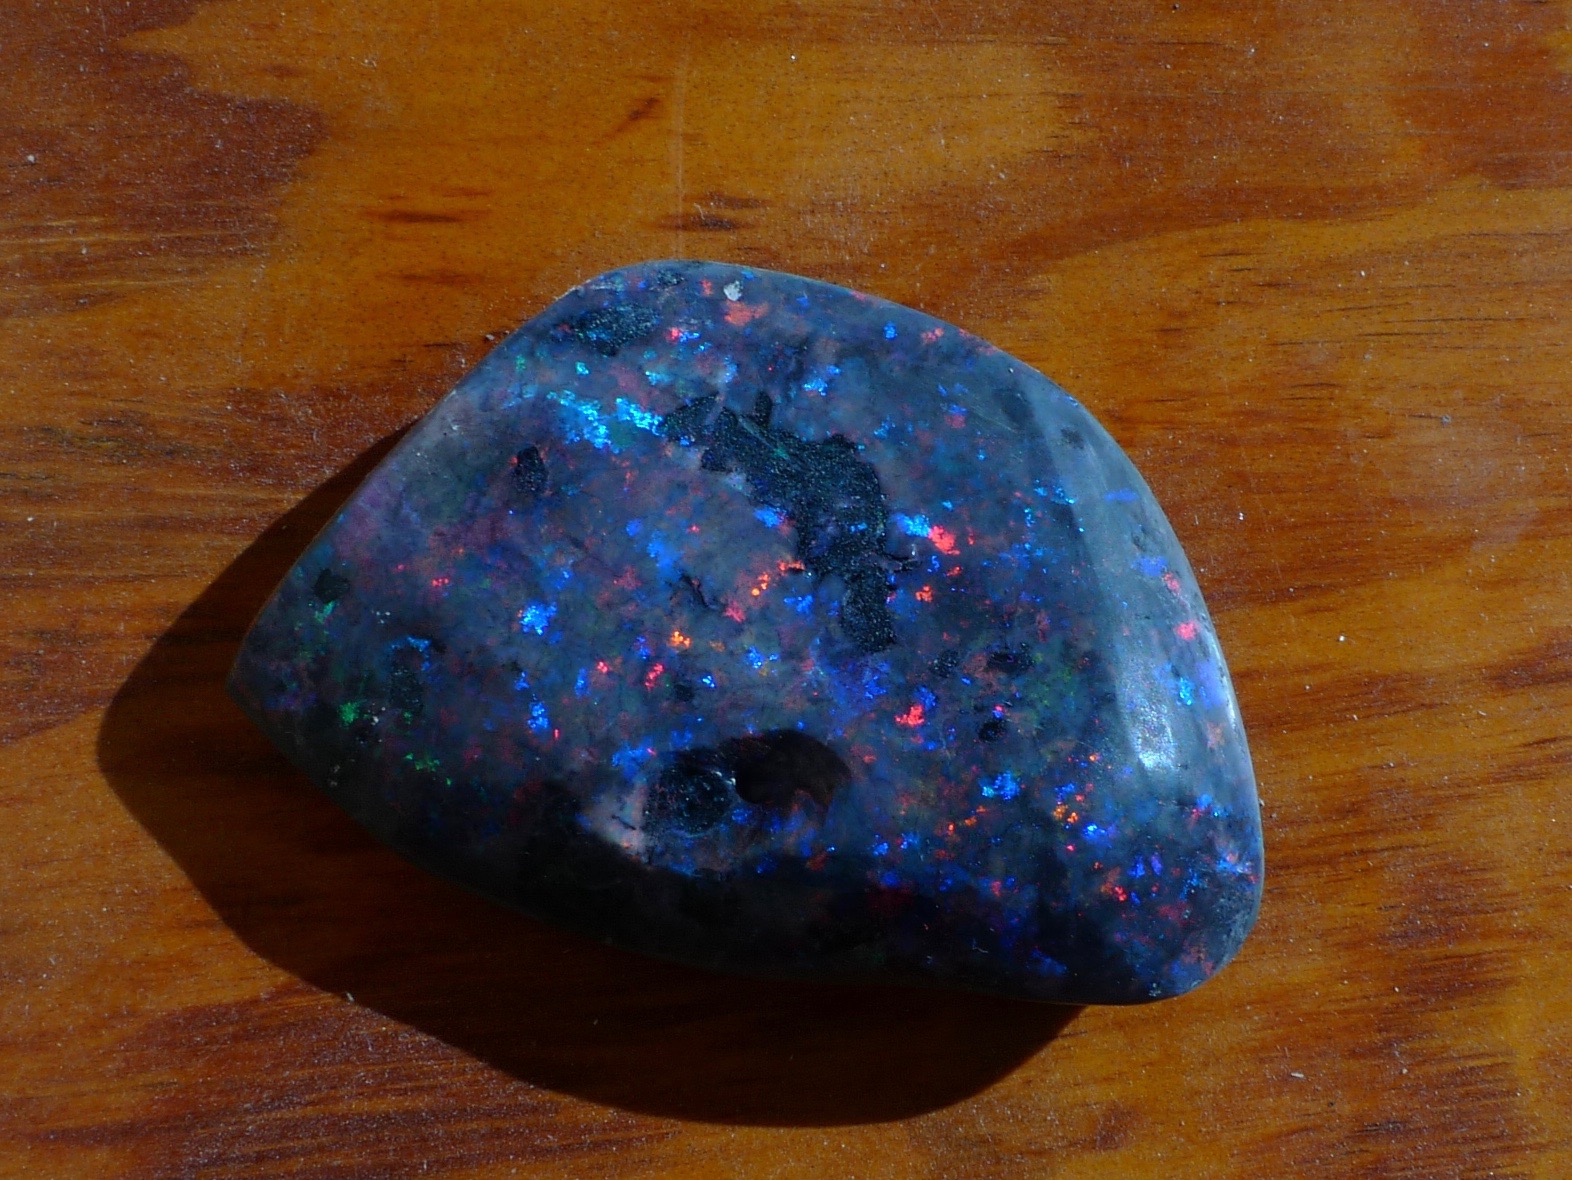 Second Piece of Treated Andamooka Matrix Opal